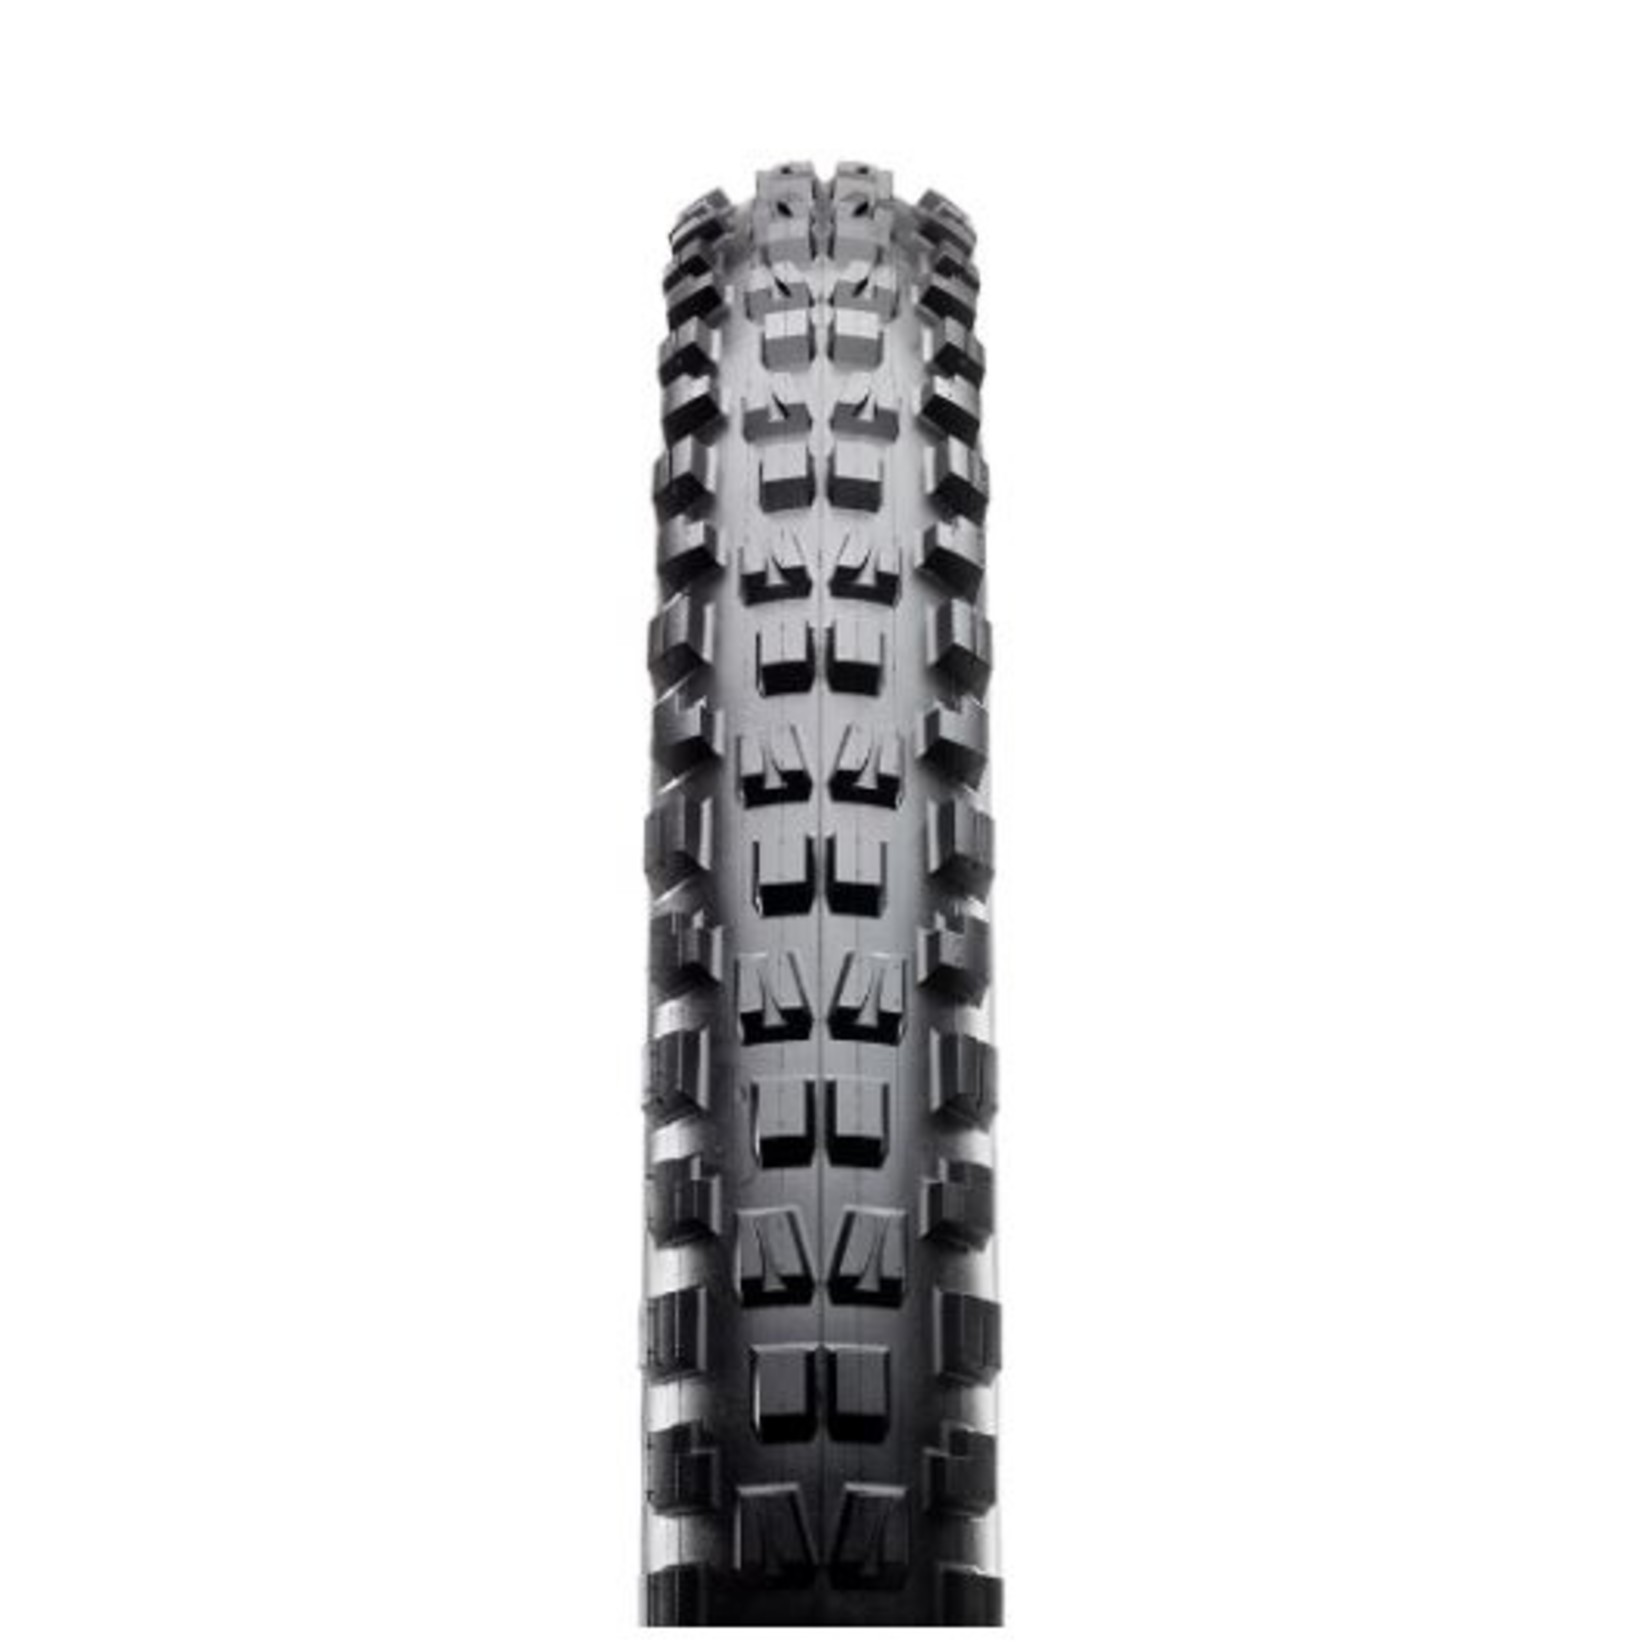 Maxxis Maxxis Minion DHF Bike Tyre - 27.5 X 2.50 - WT Folding 60TPI Exo 3C TR - Pair